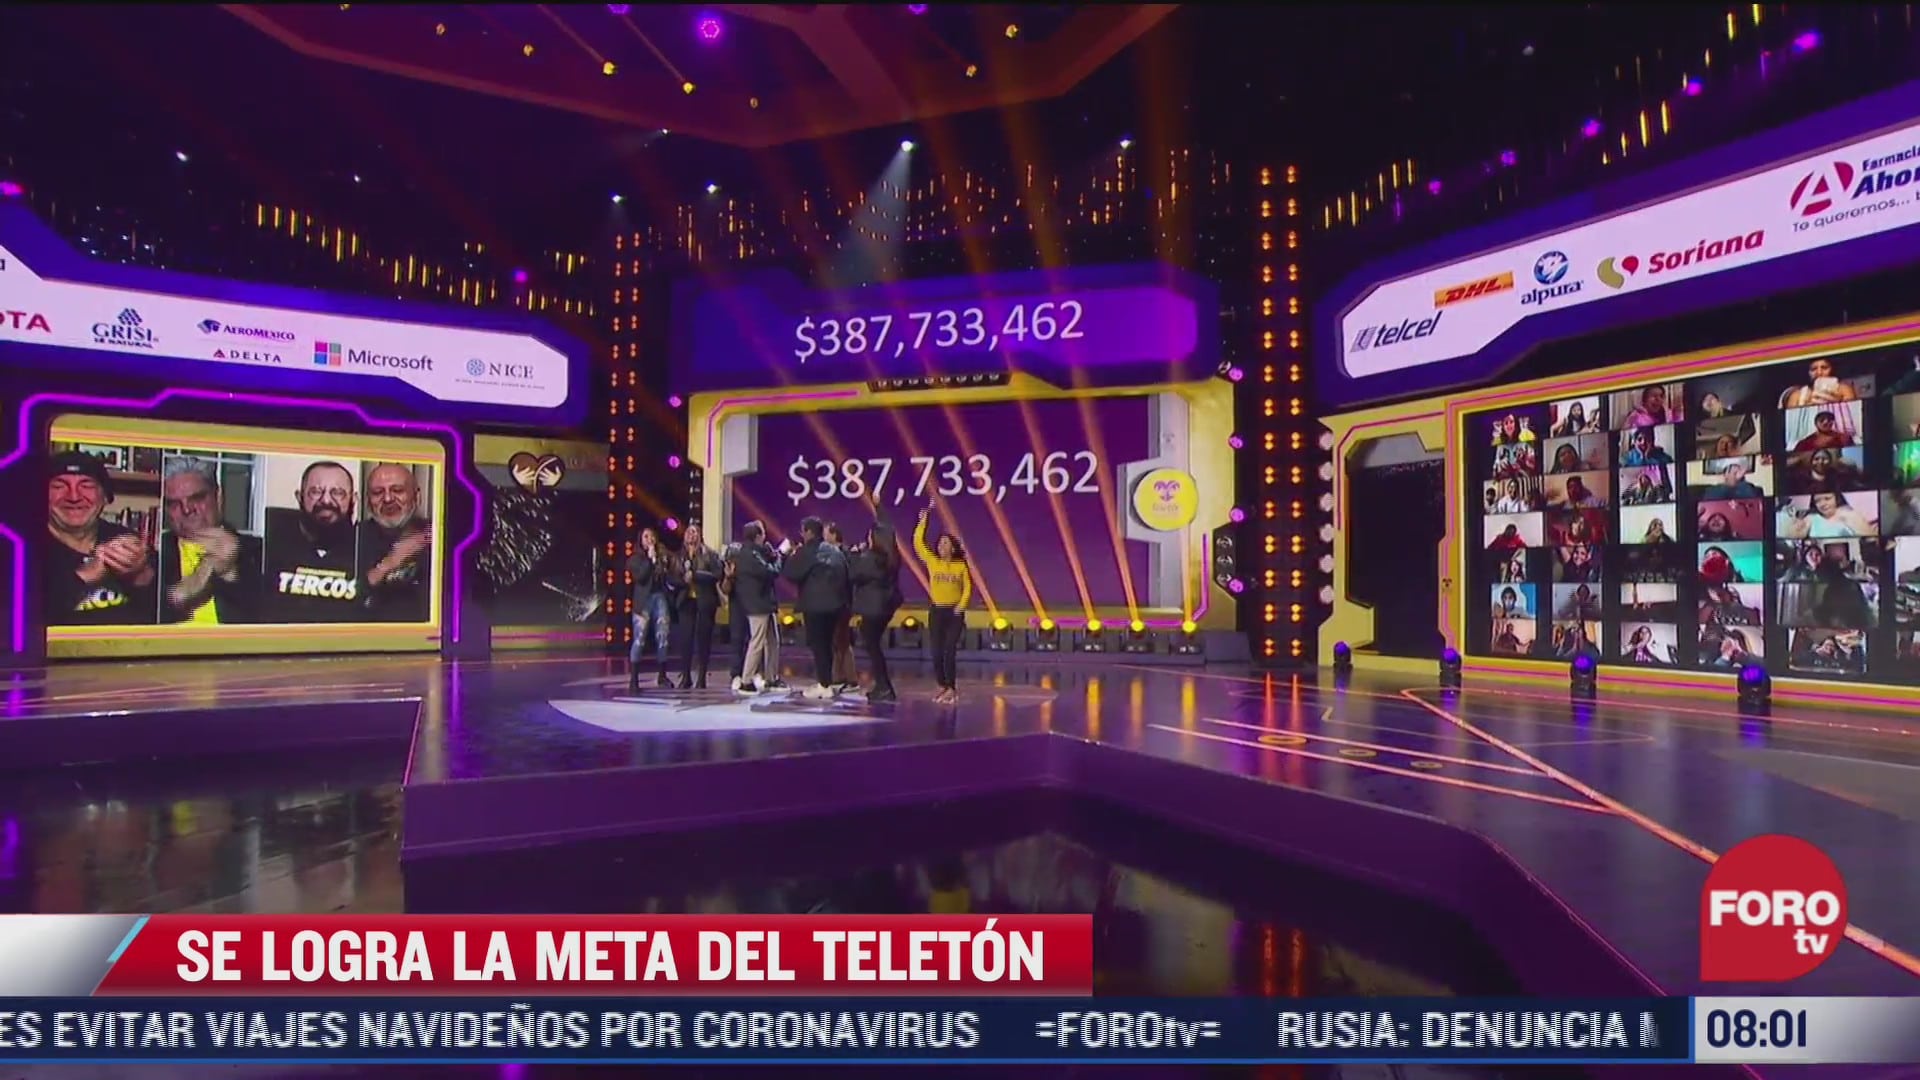 teleton mexico recauda 387 millones 733 mil 462 pesos